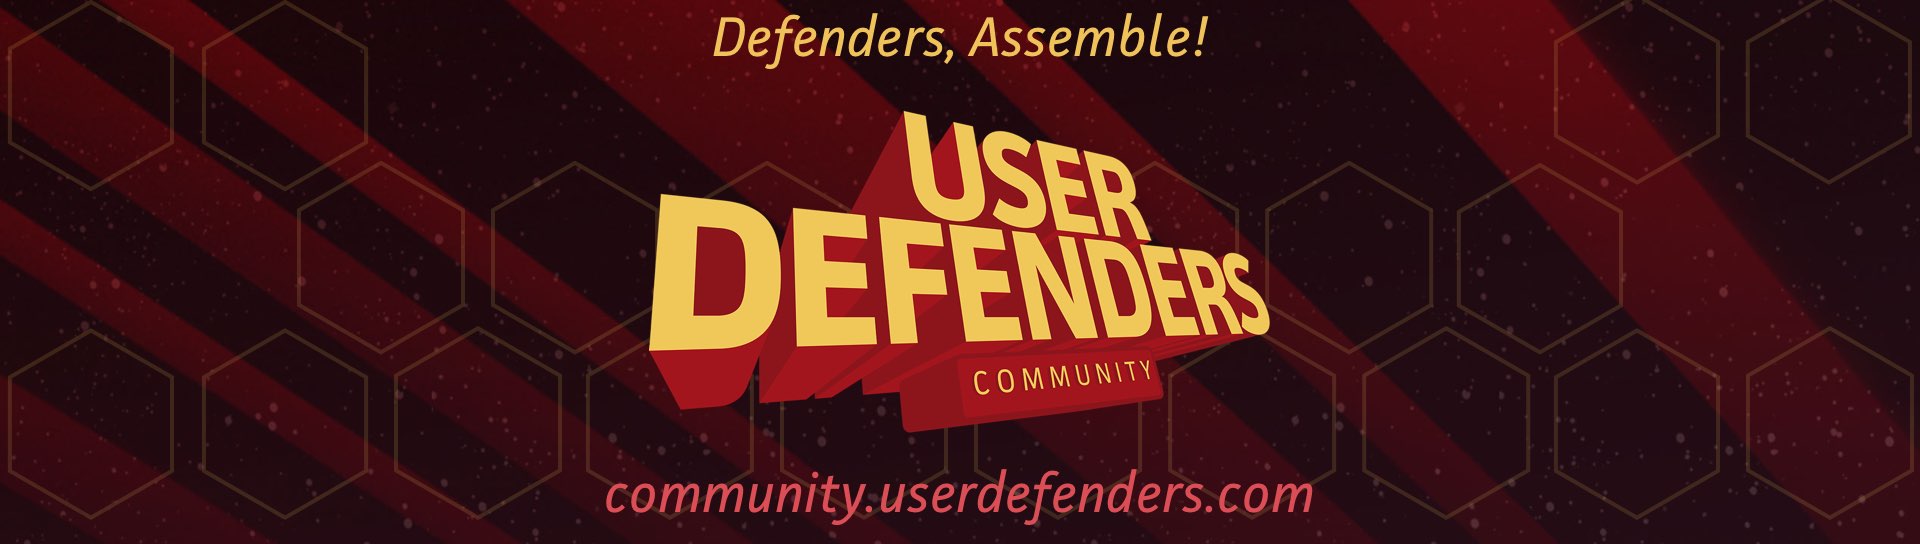 User Defenders: Community - Defenders, Assemble!